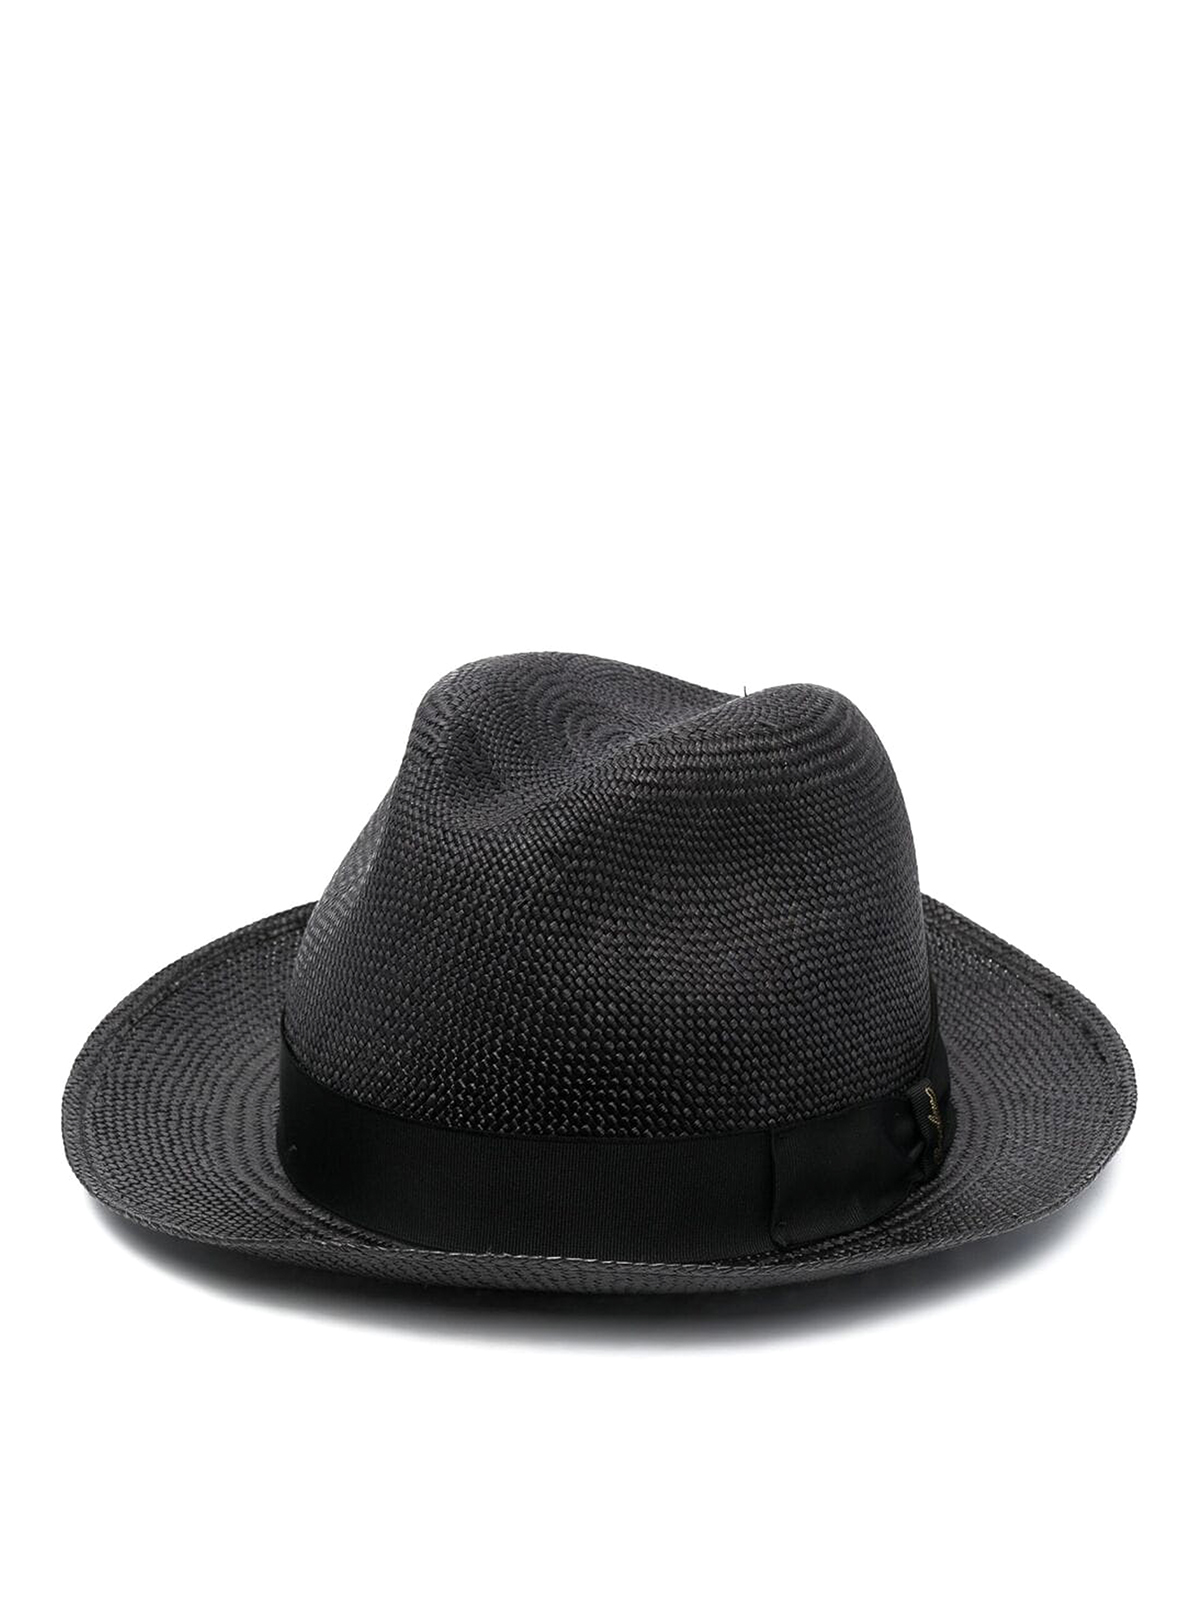 Borsalino Jet-black Straw Curved-brim Hat